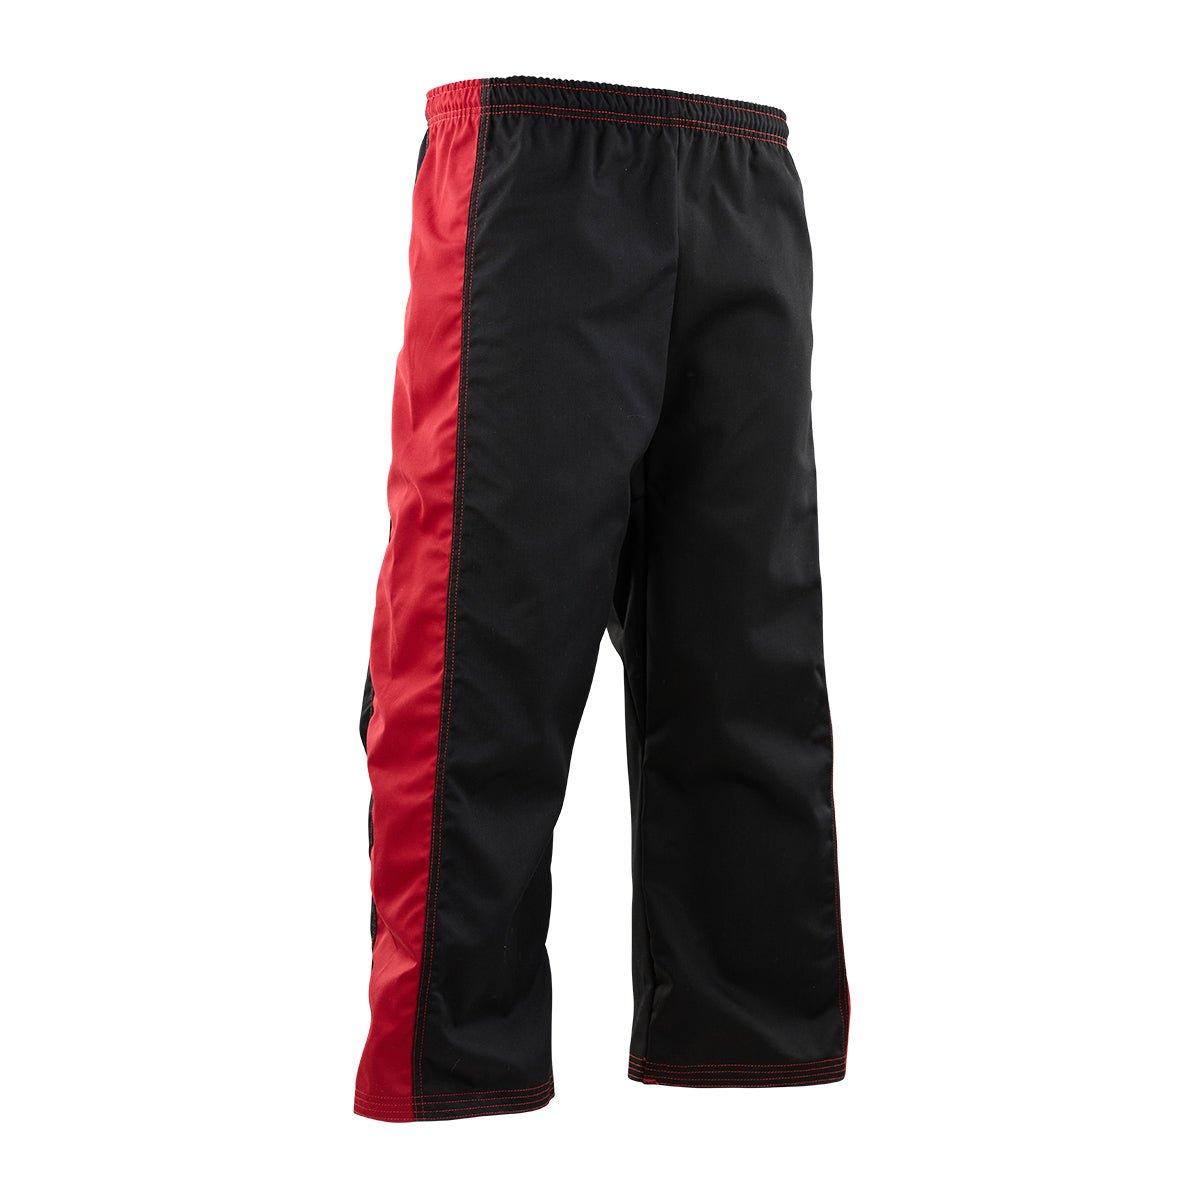 Tri-Color Program Uniform Pants Black Grey Red